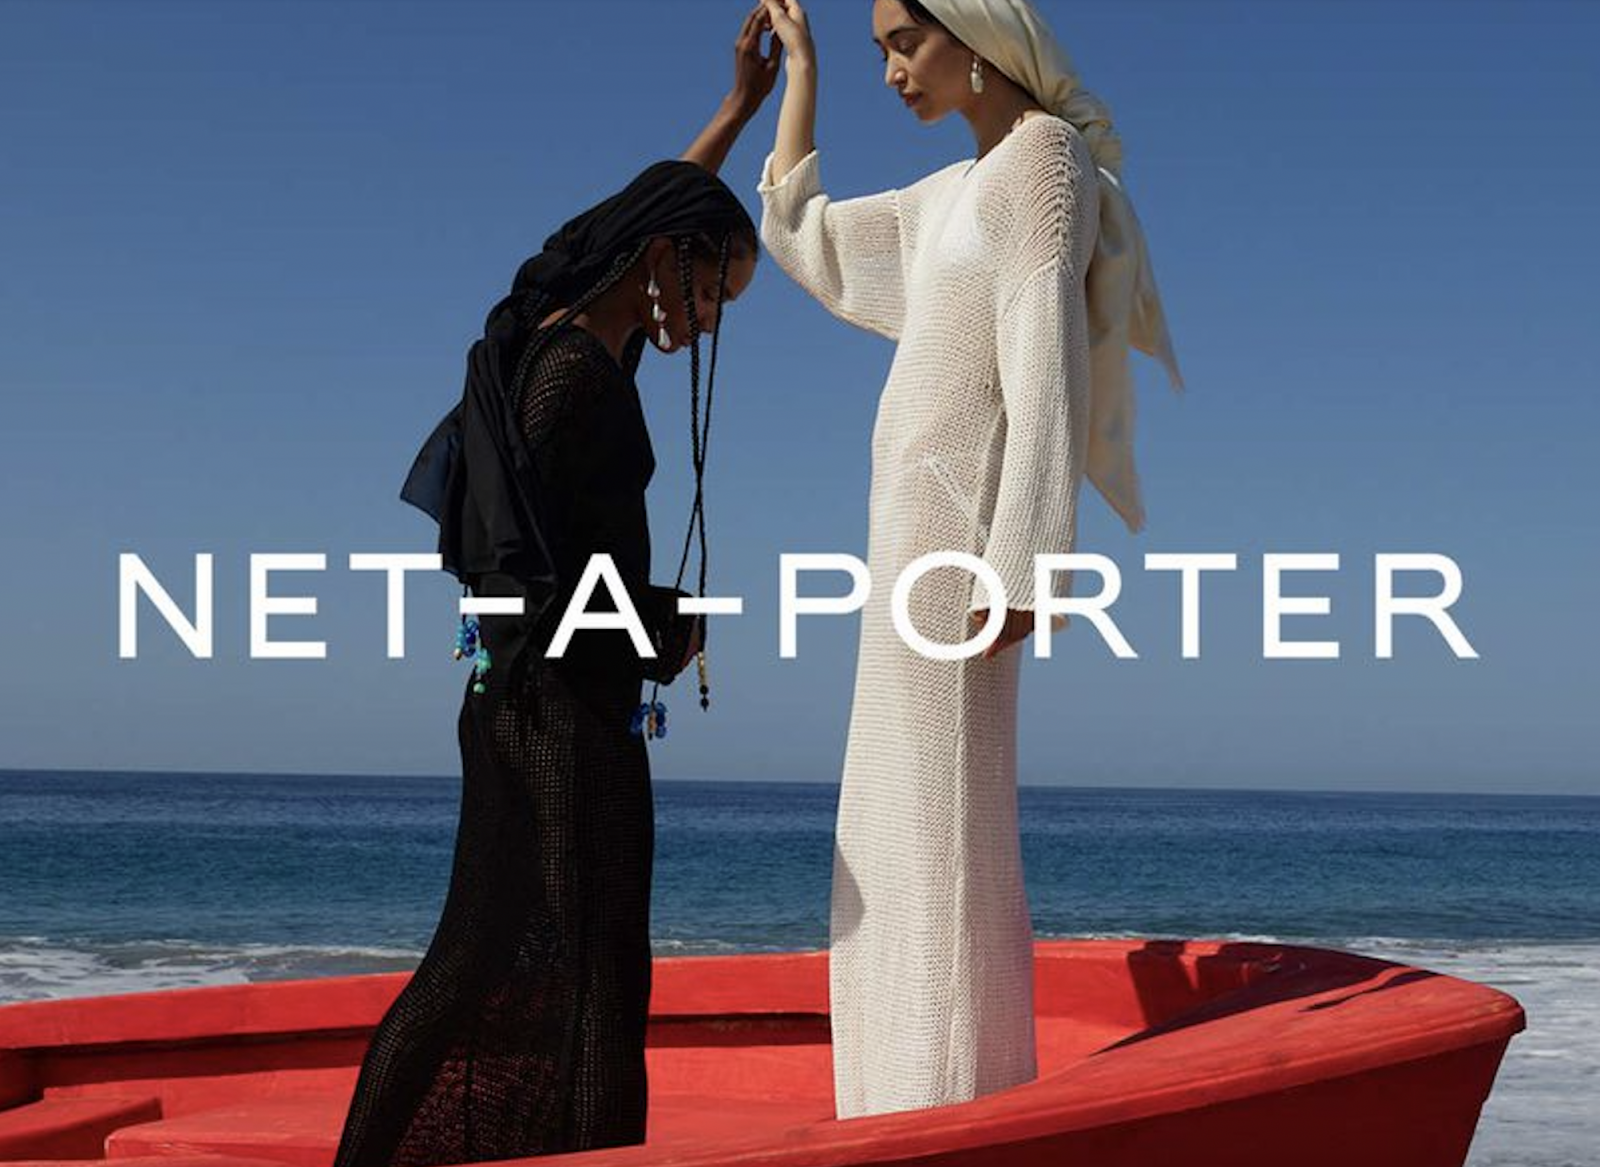 A Net-a-Porter ad campaign